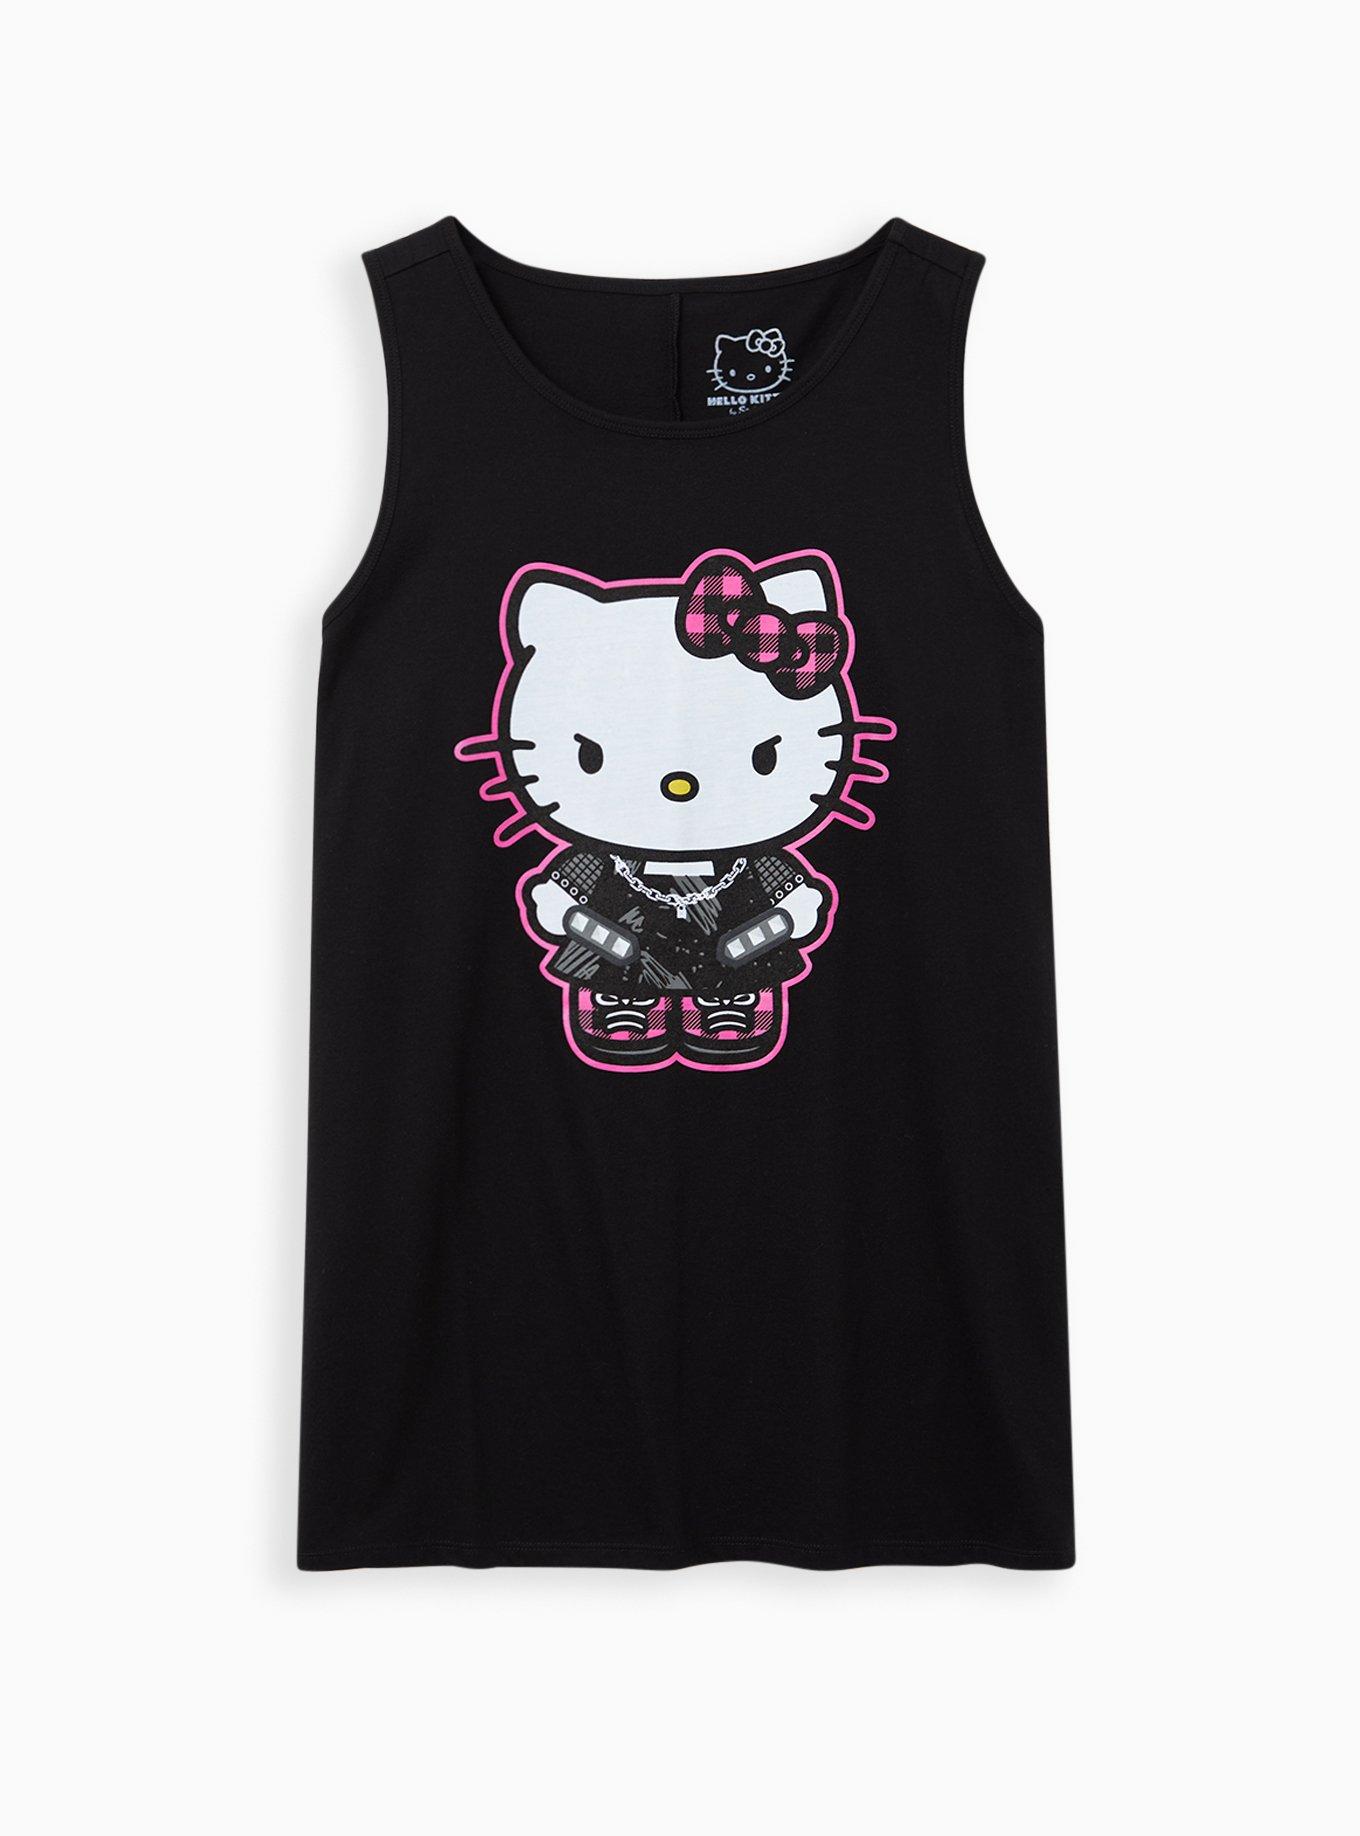 Plus Size - Punk Hello Kitty Tank - Black - Torrid